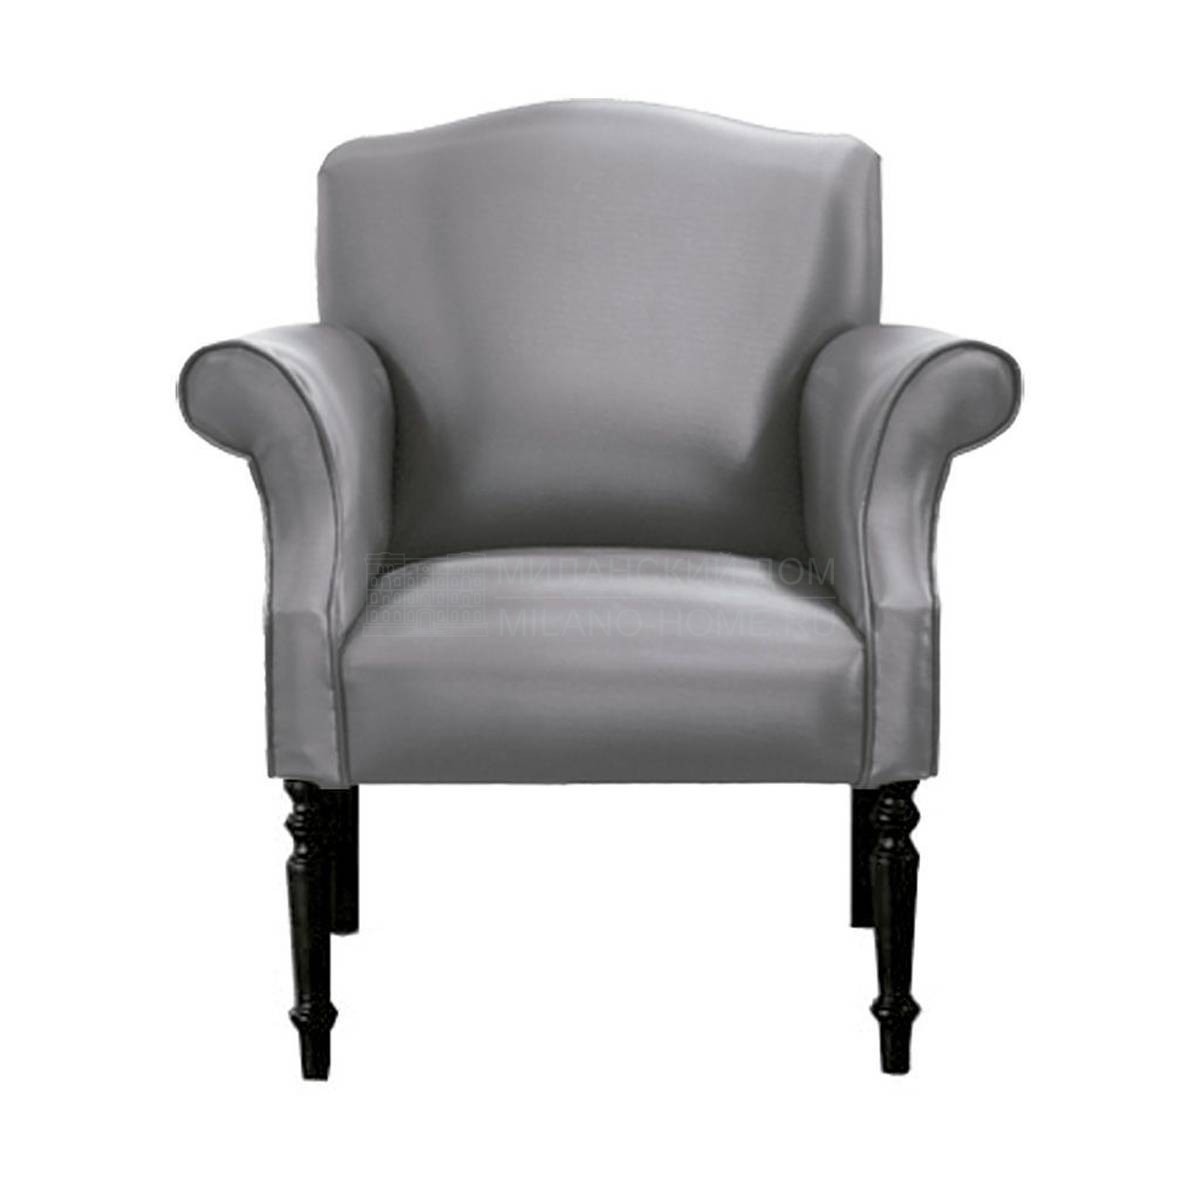 Кожаное кресло Z-8121 armchair из Испании фабрики GUADARTE